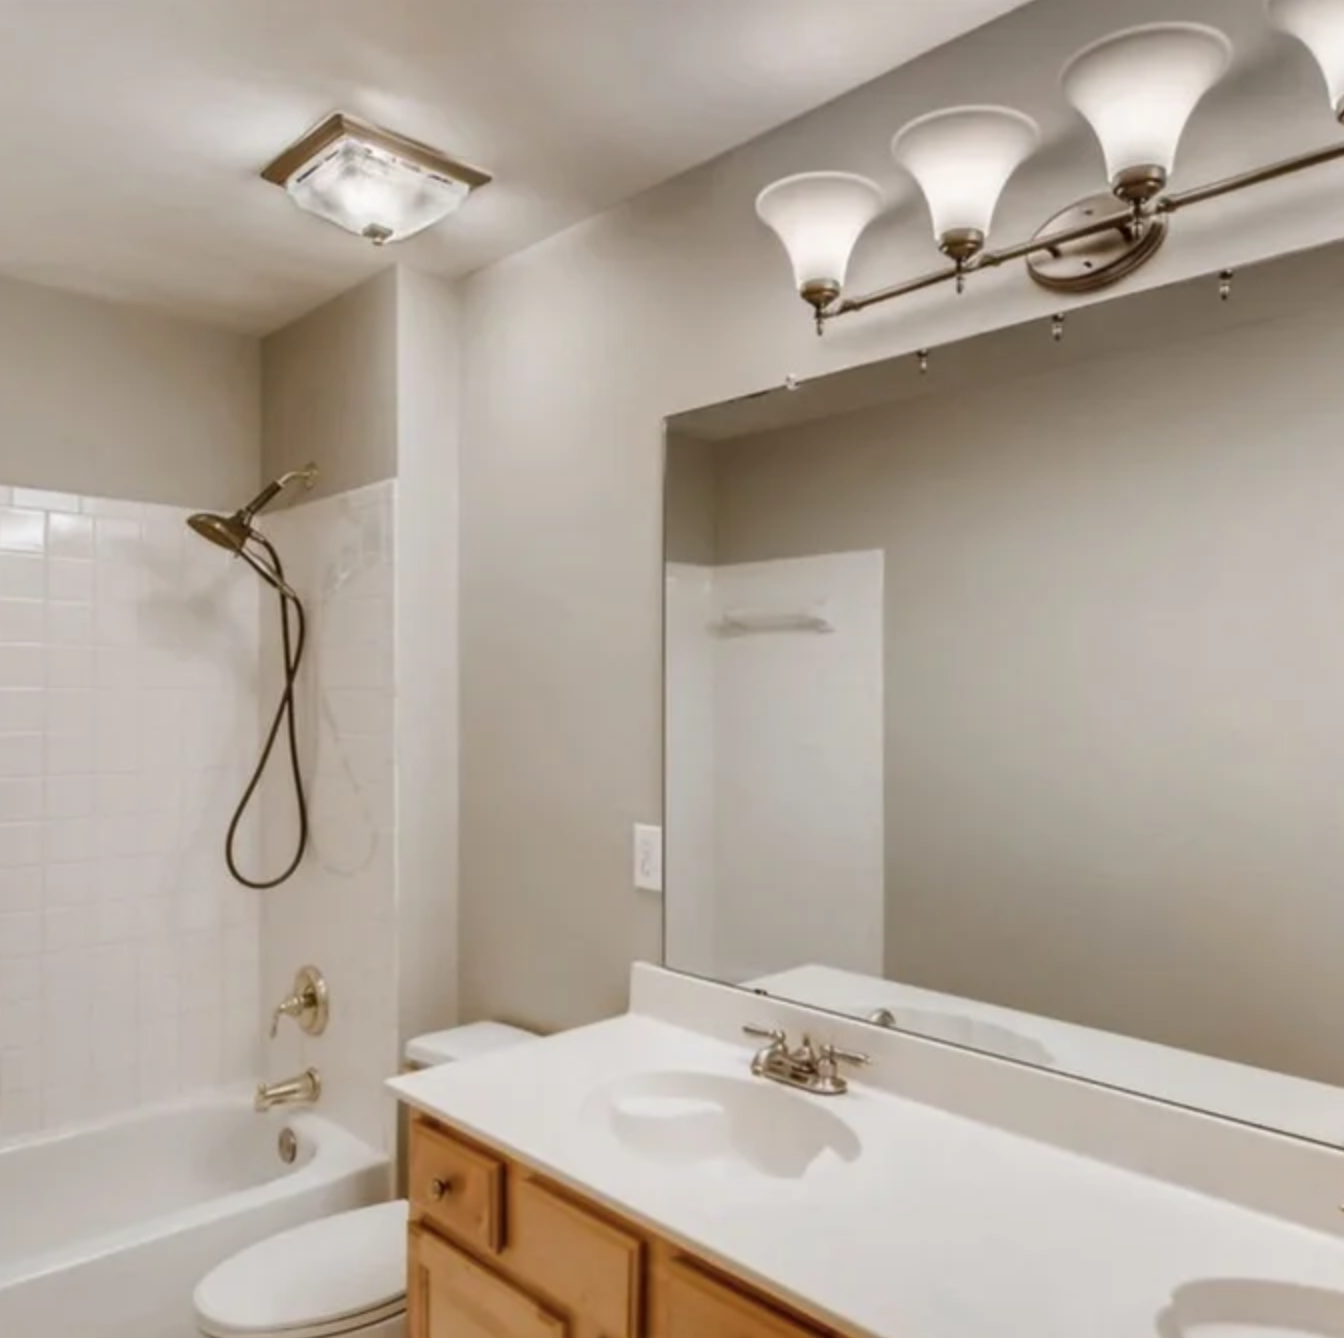 the bathroom light fan on a ceiling